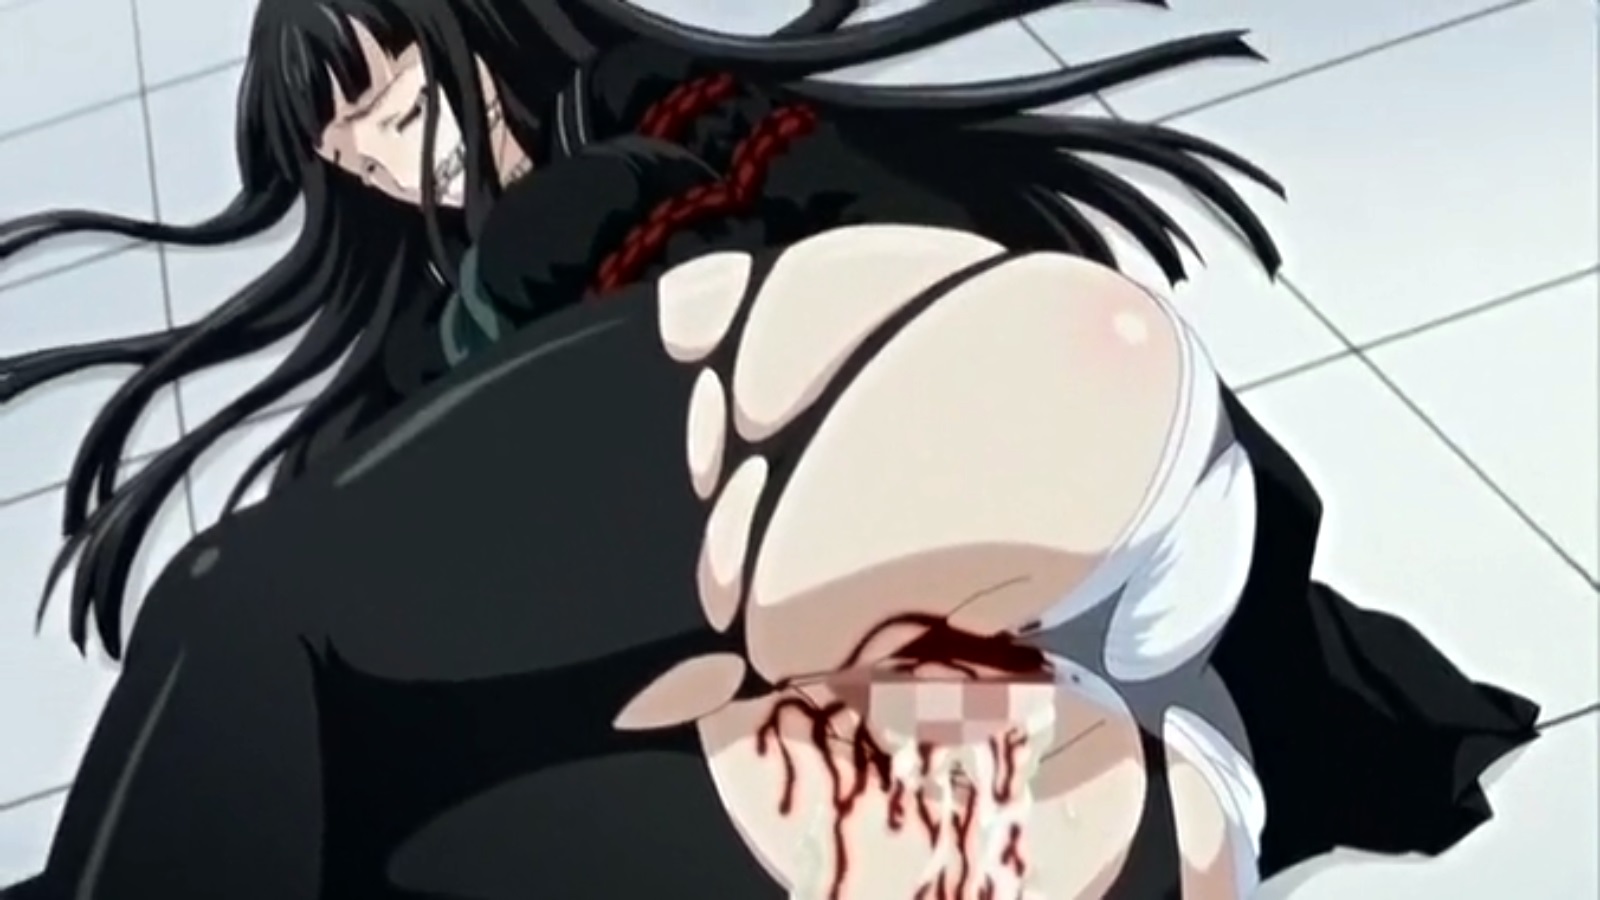 Hentai Extreme Forced Fuck - Brutal Hentai Movie Rape, Blood, Ache, Death | HentaiMovie.Tv